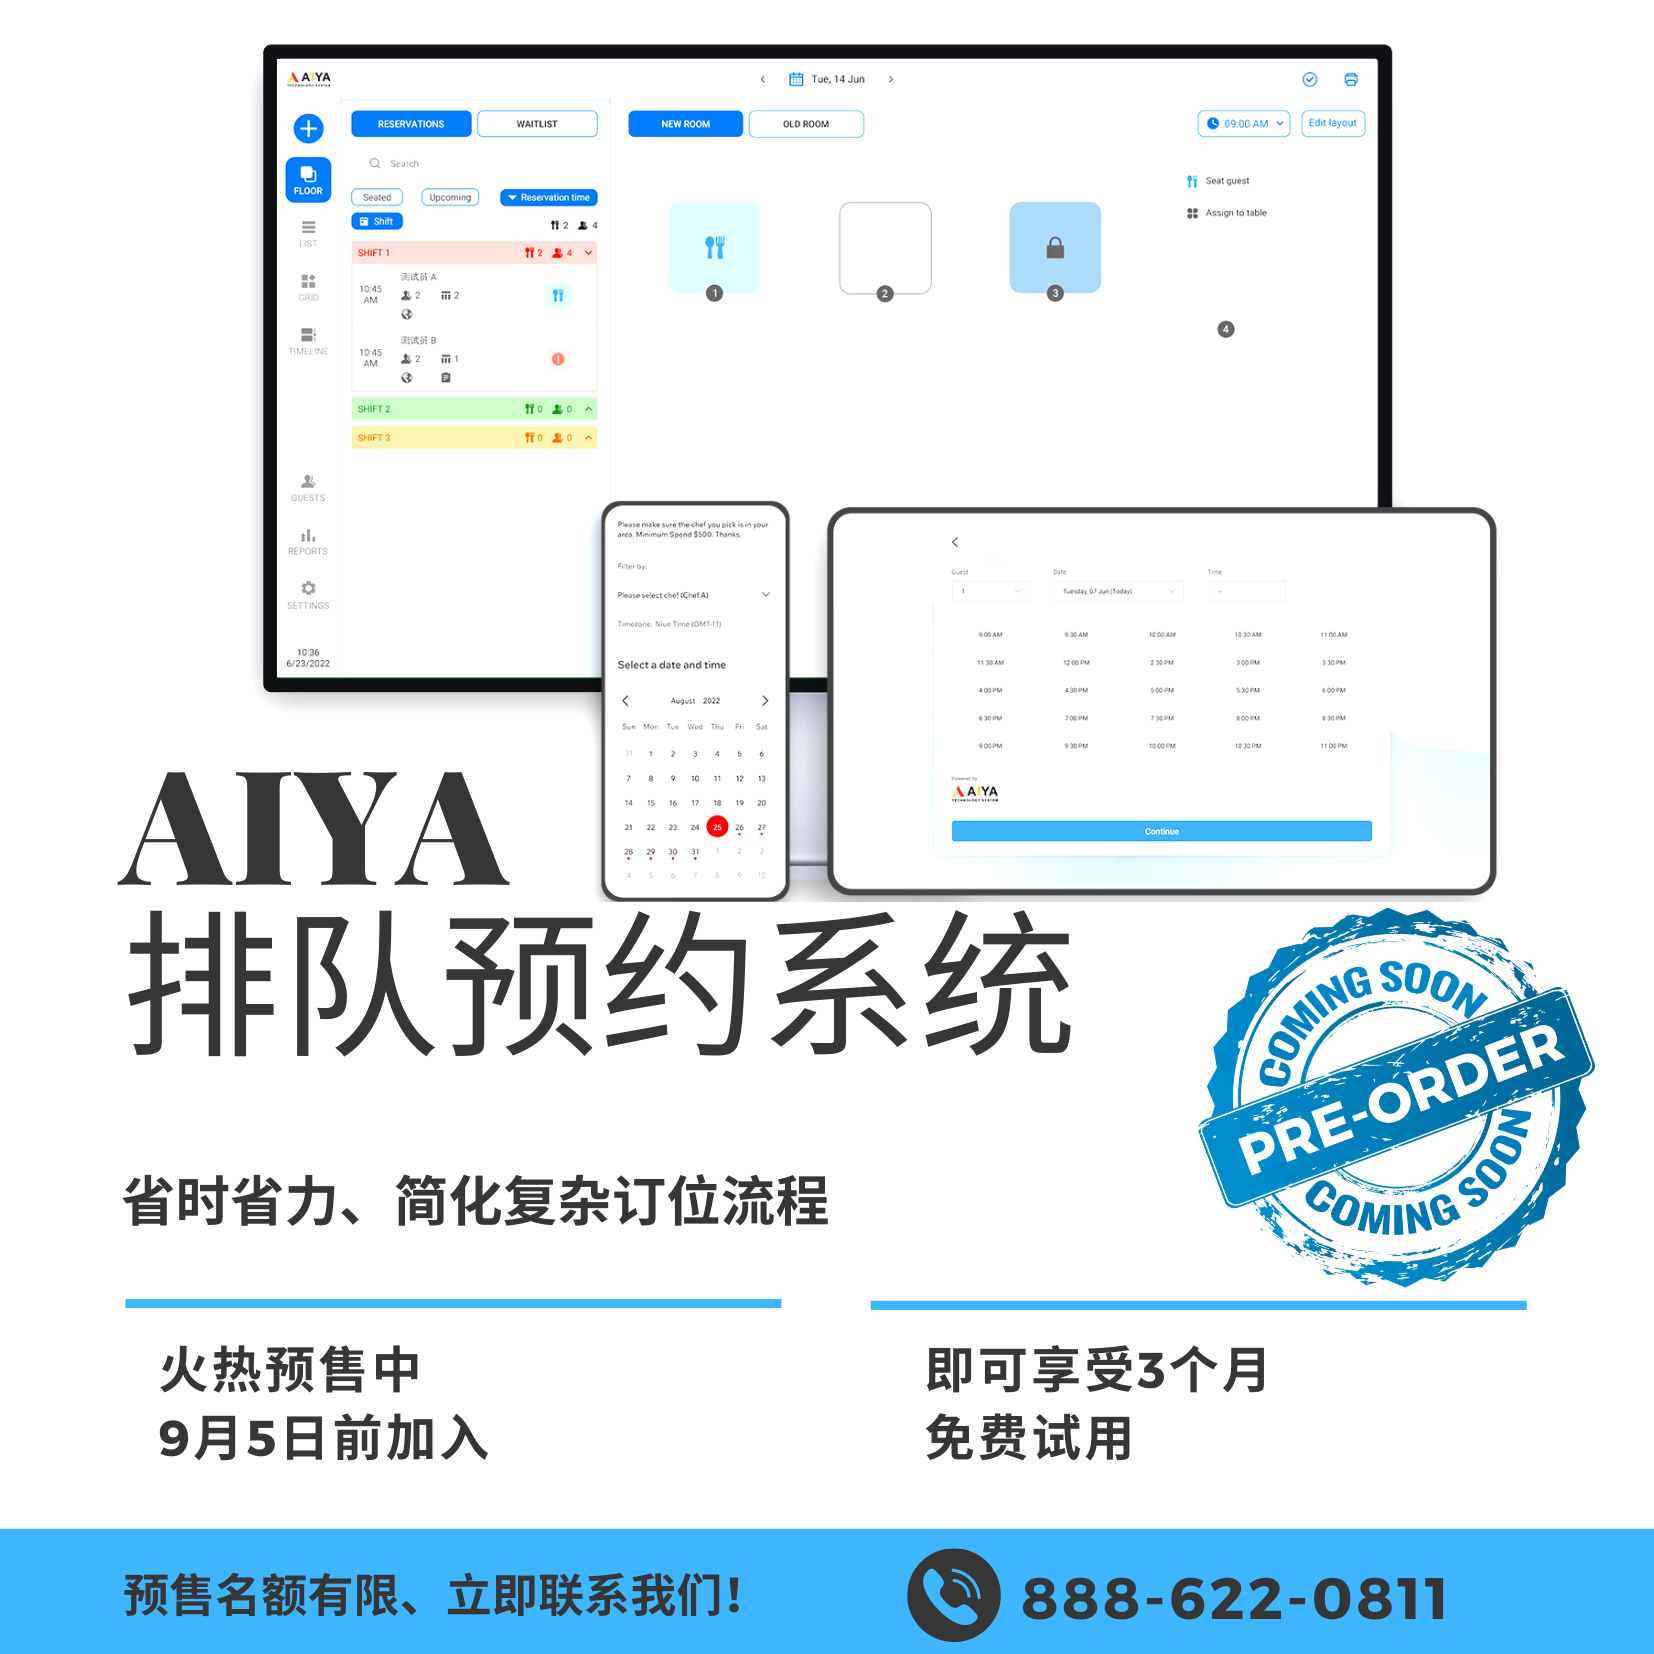 AIYA Reservation Pre-order 中文版.png